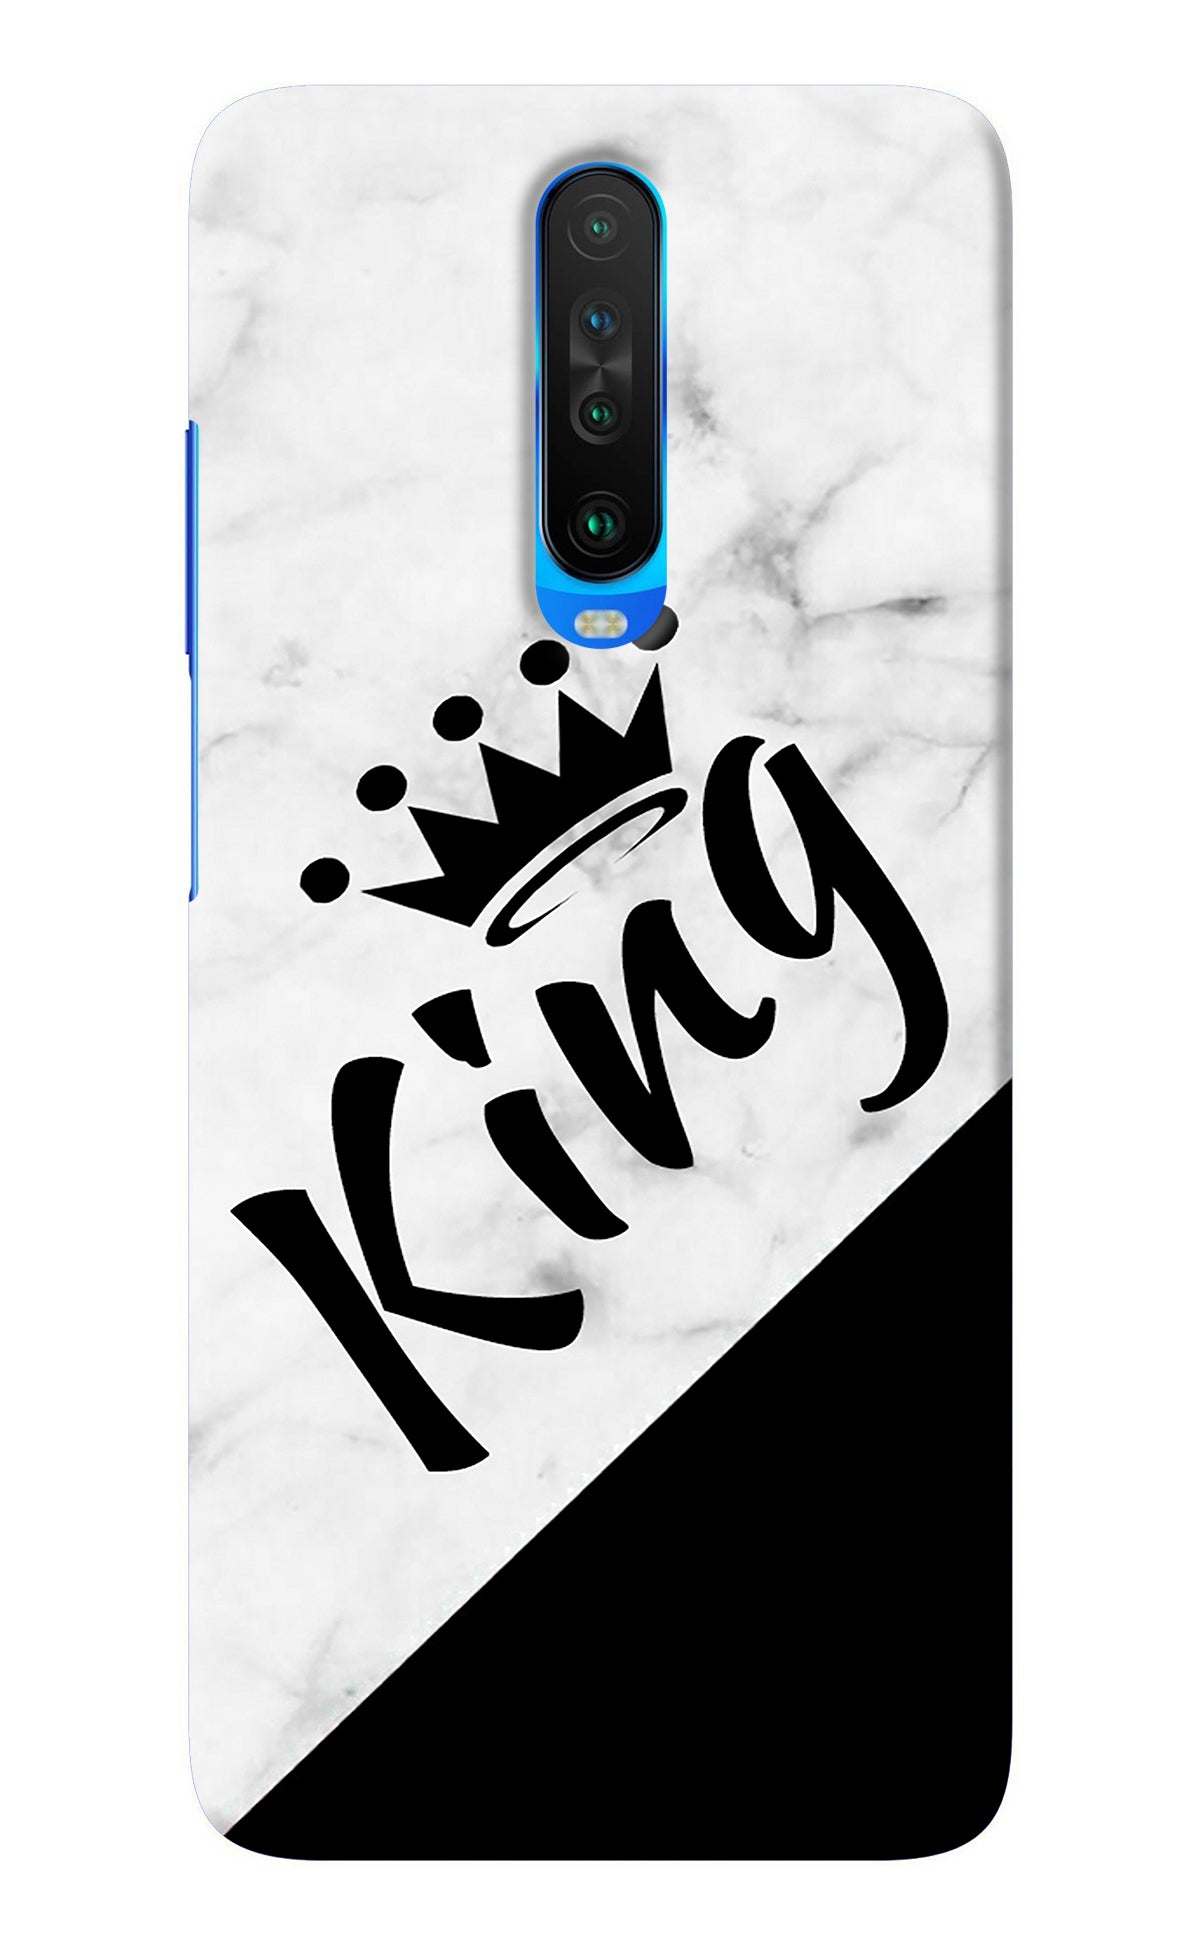 King Poco X2 Back Cover